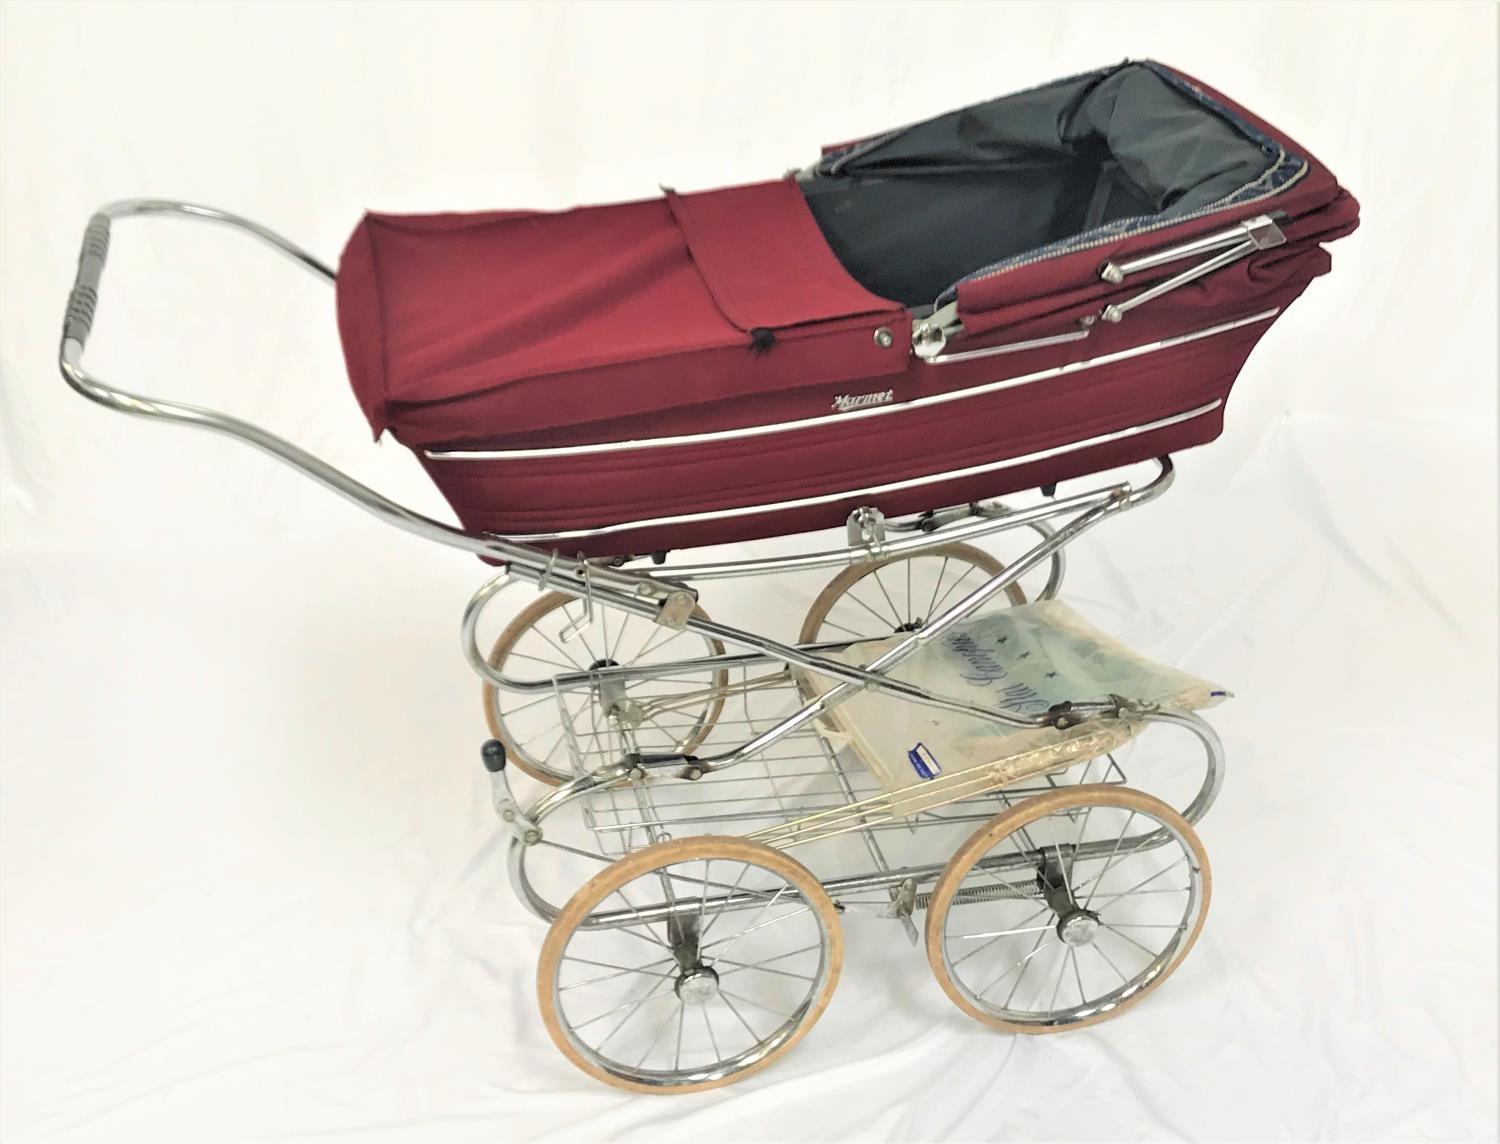 MARMET PRAM with a burgundy body with rain cover and folding hood on a four wheel chrome folding